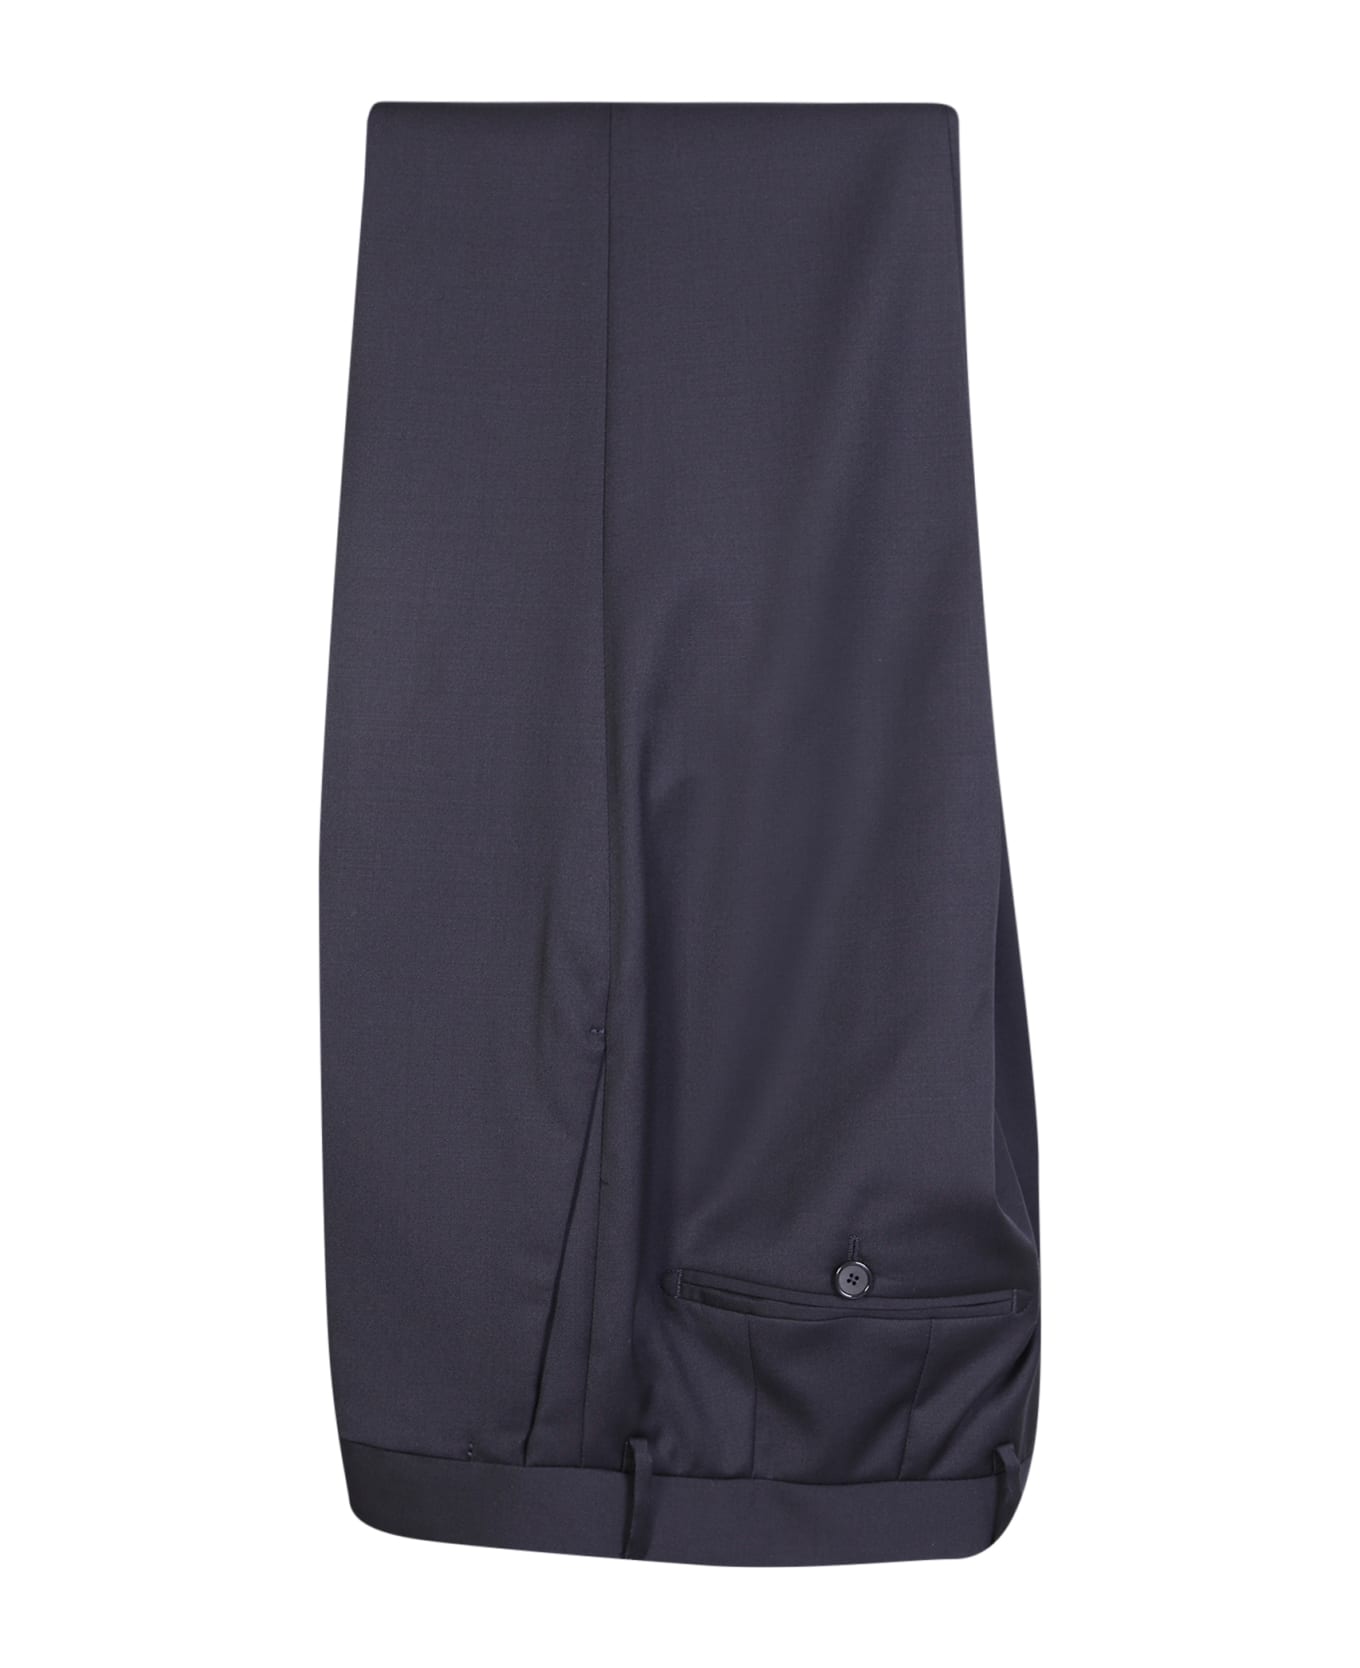 Tagliatore Suit With Vest Sallia' Blue - Blue スーツ